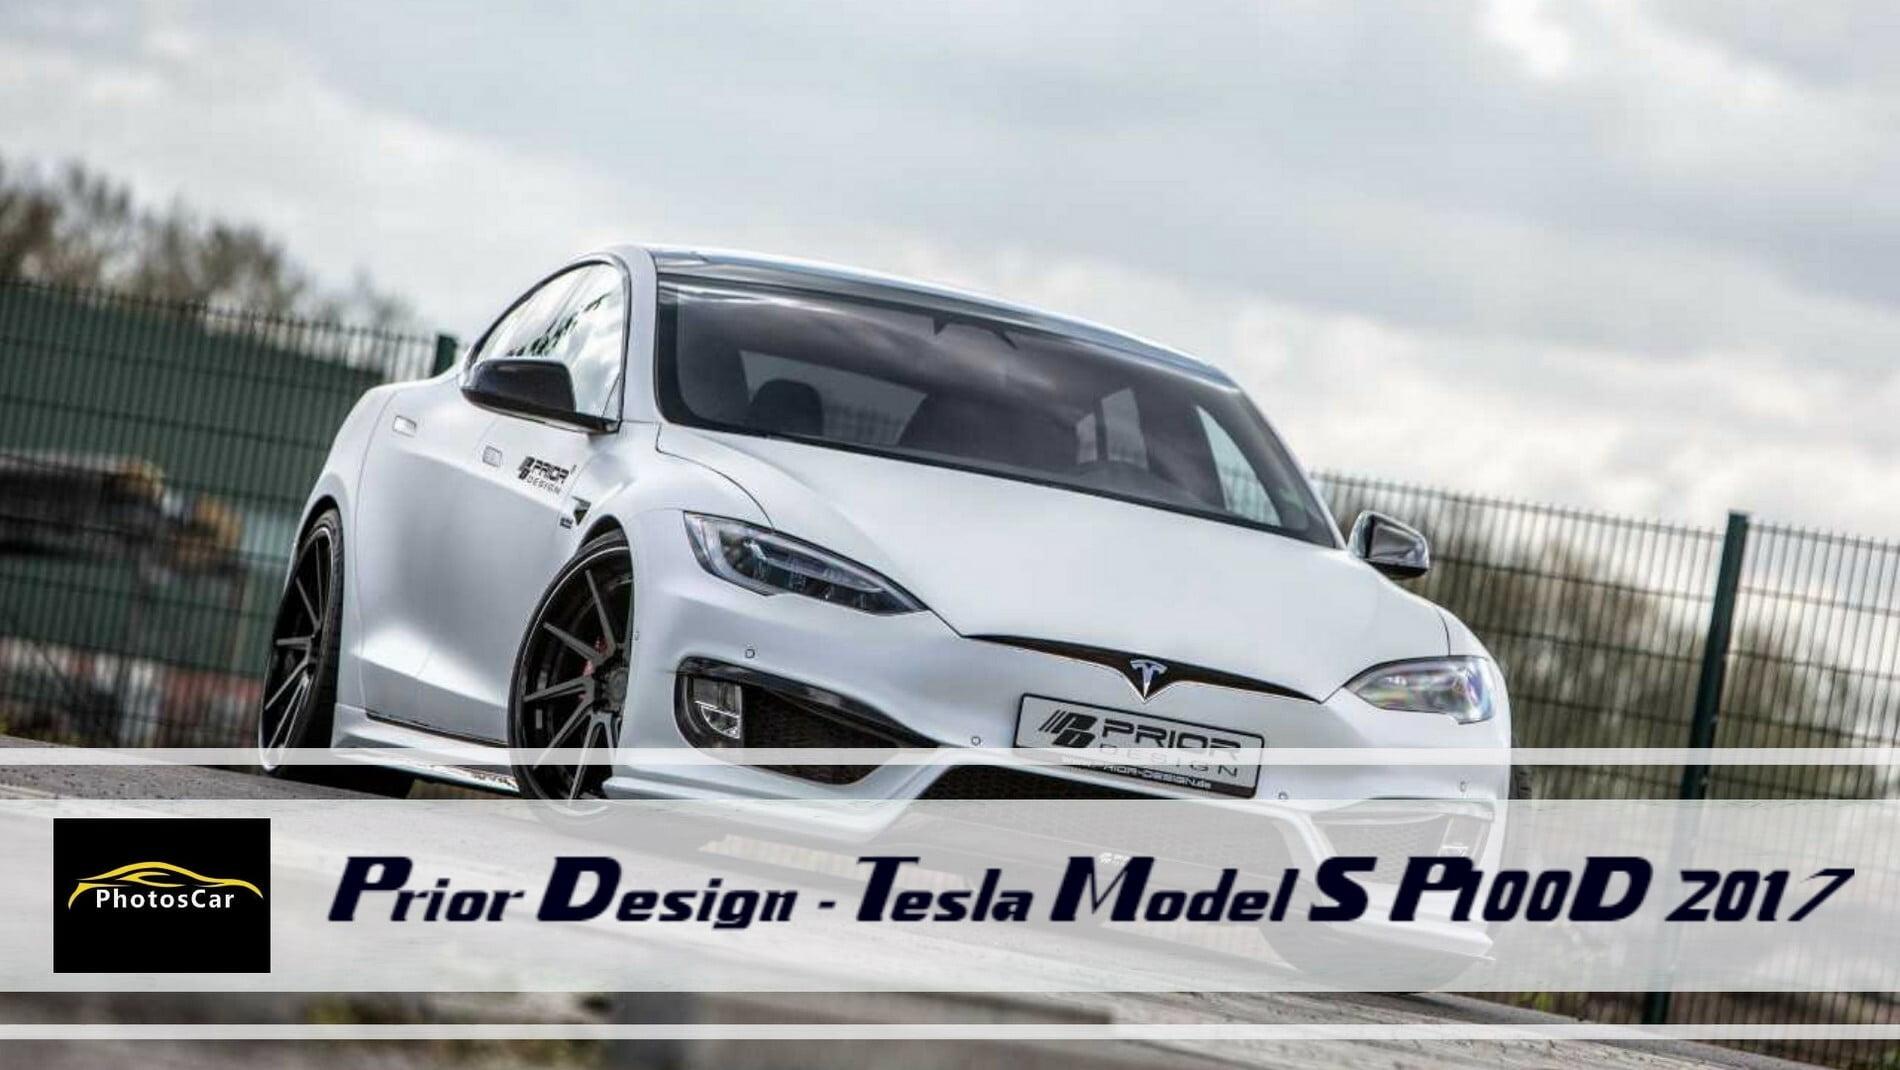 Prior Design - Tesla Model S P100D 2017